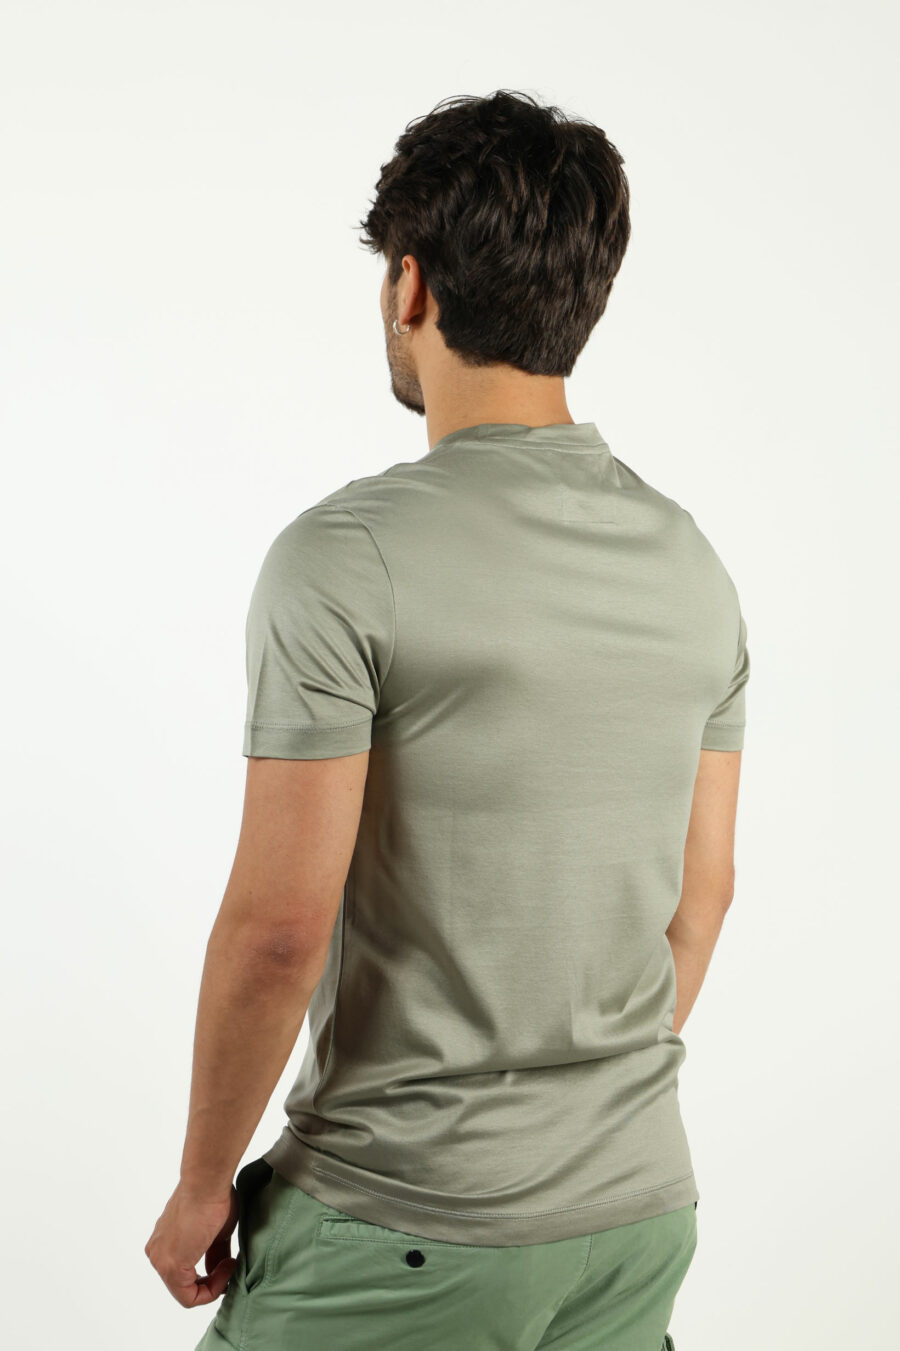 Camiseta verde oliva con minilogo blanco - number13535